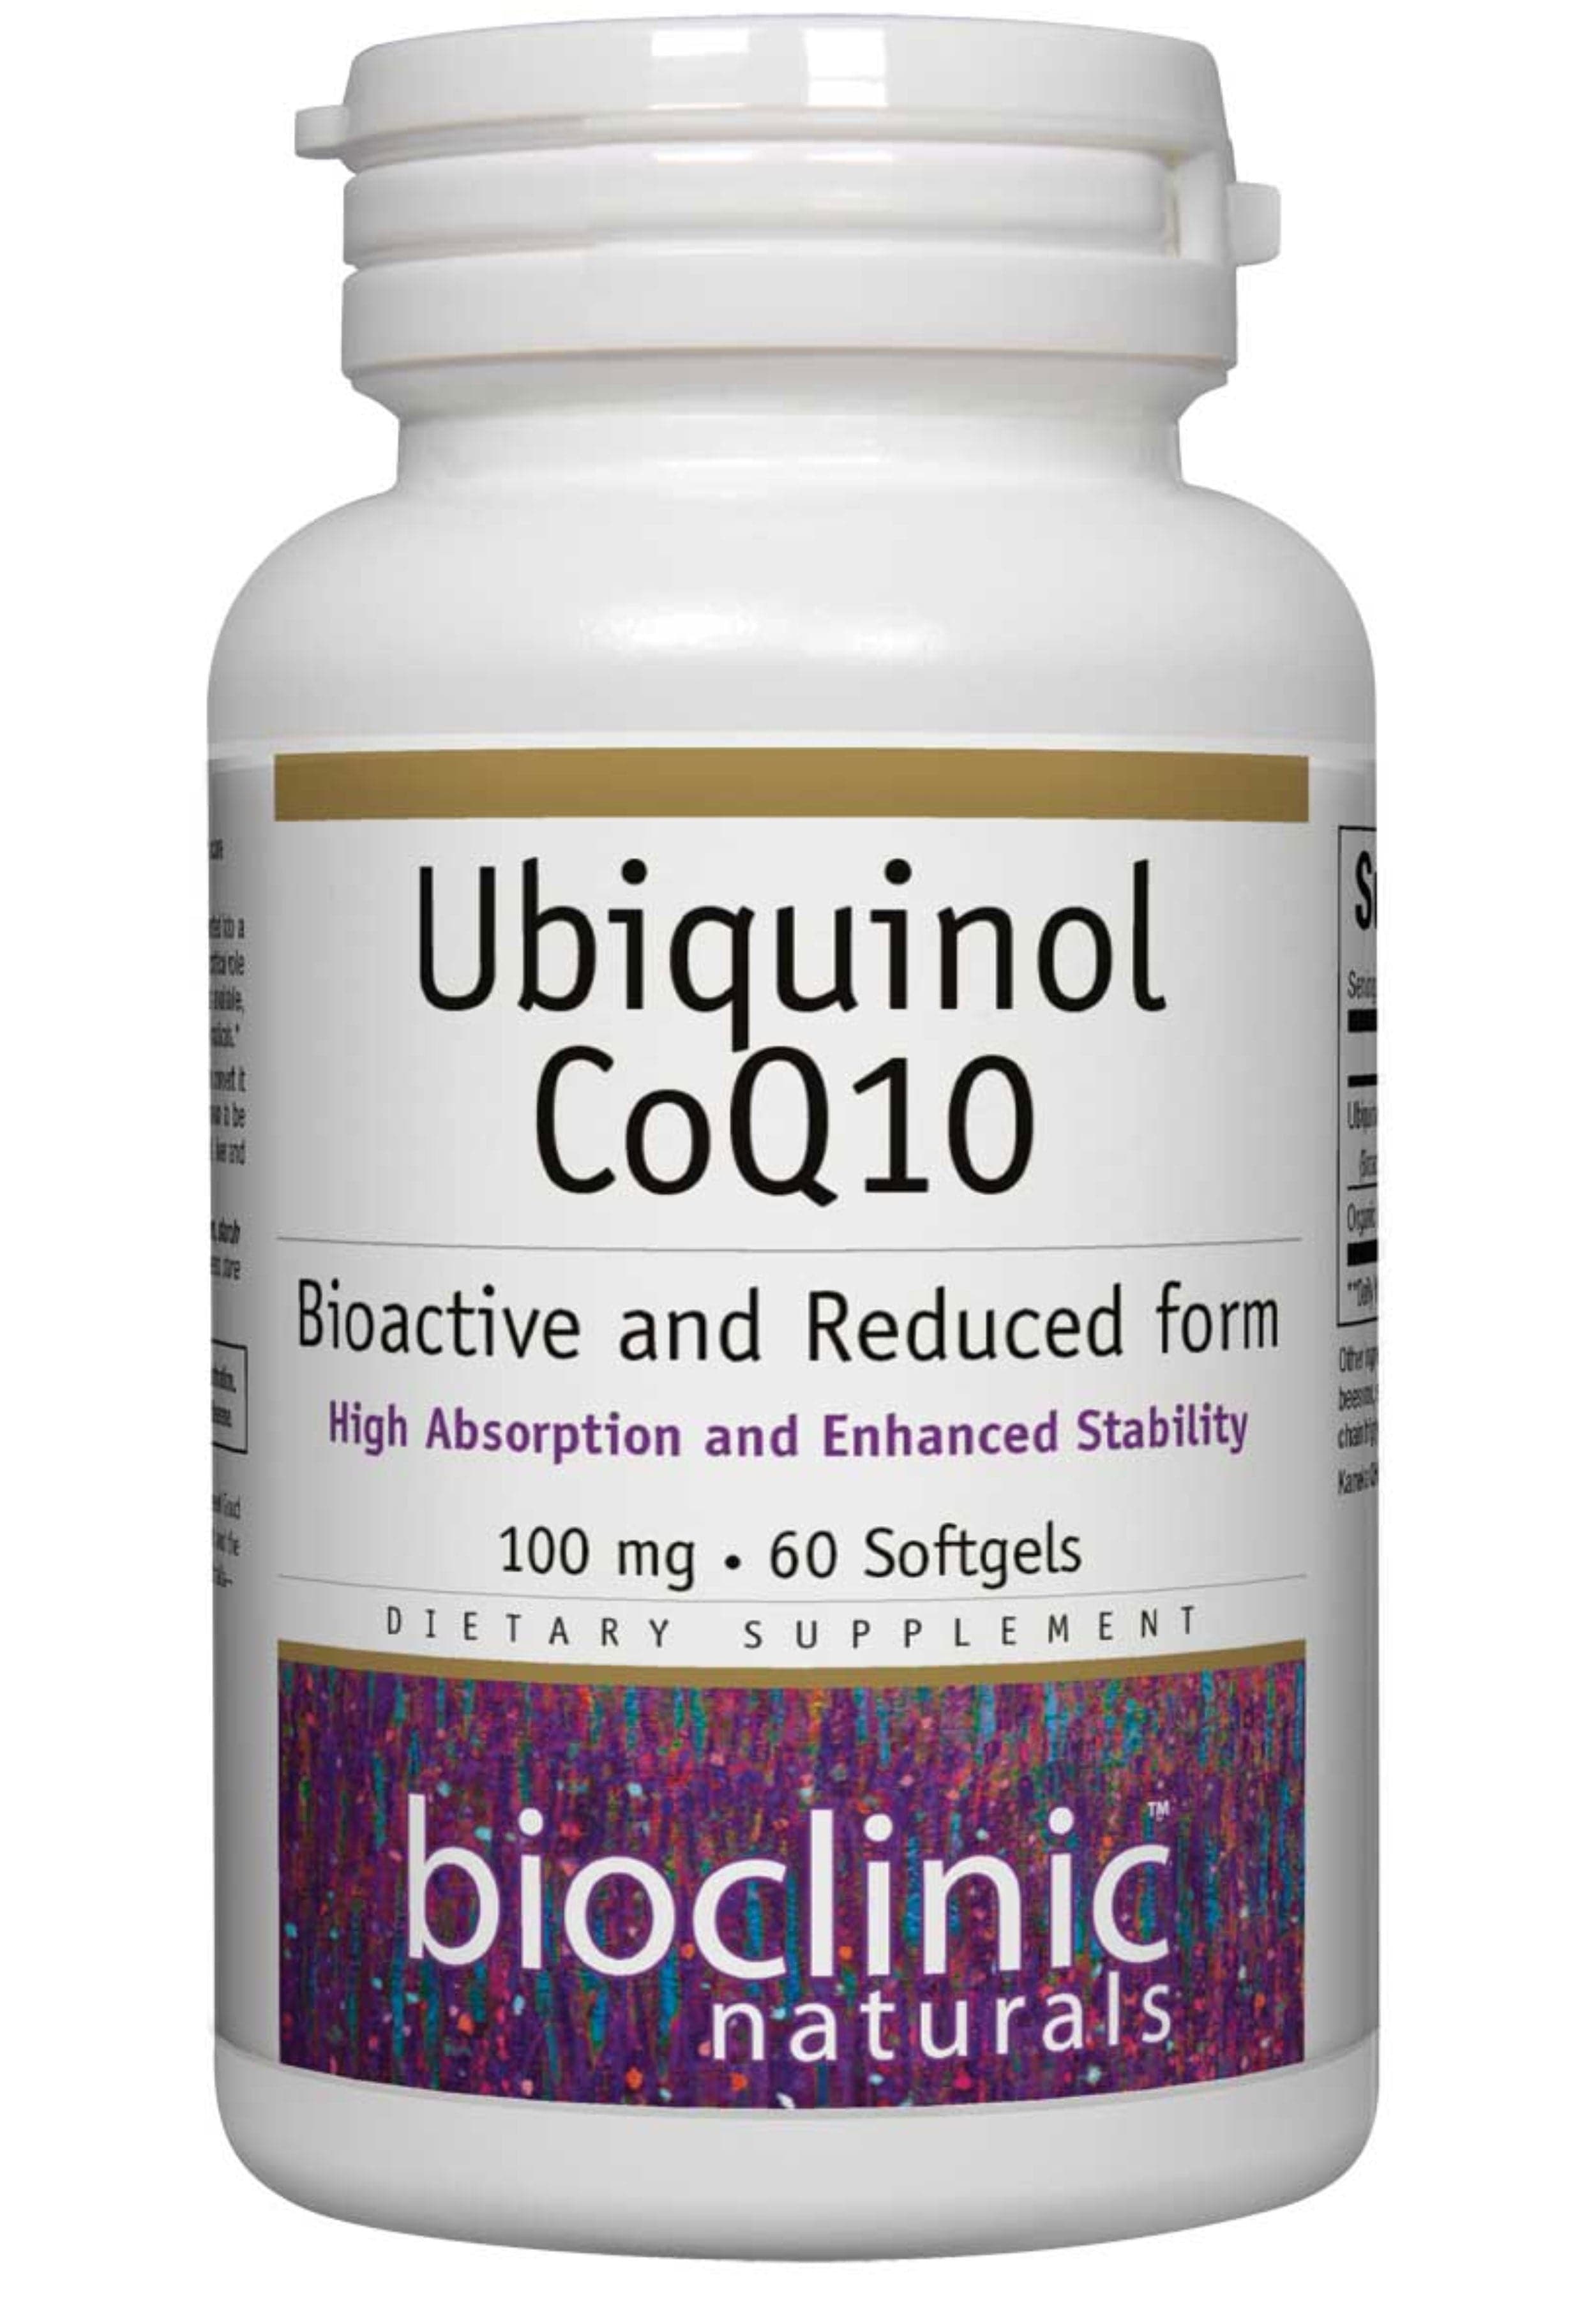 Bioclinic Naturals Ubiquinol CoQ10 100 mg